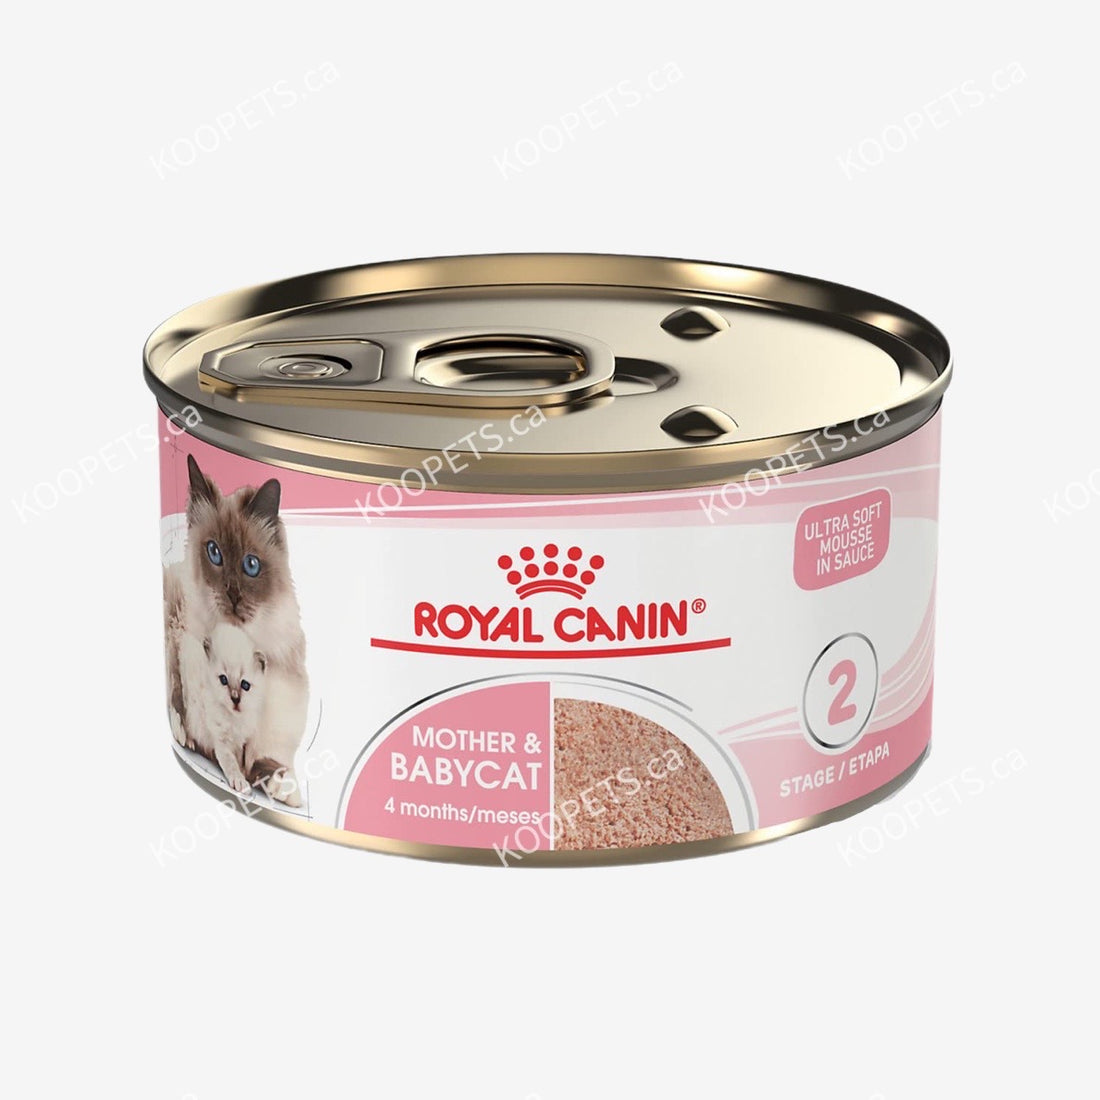 Royal Canin | 幼猫(1-4个月)/怀孕/哺乳猫用 - 奶糕